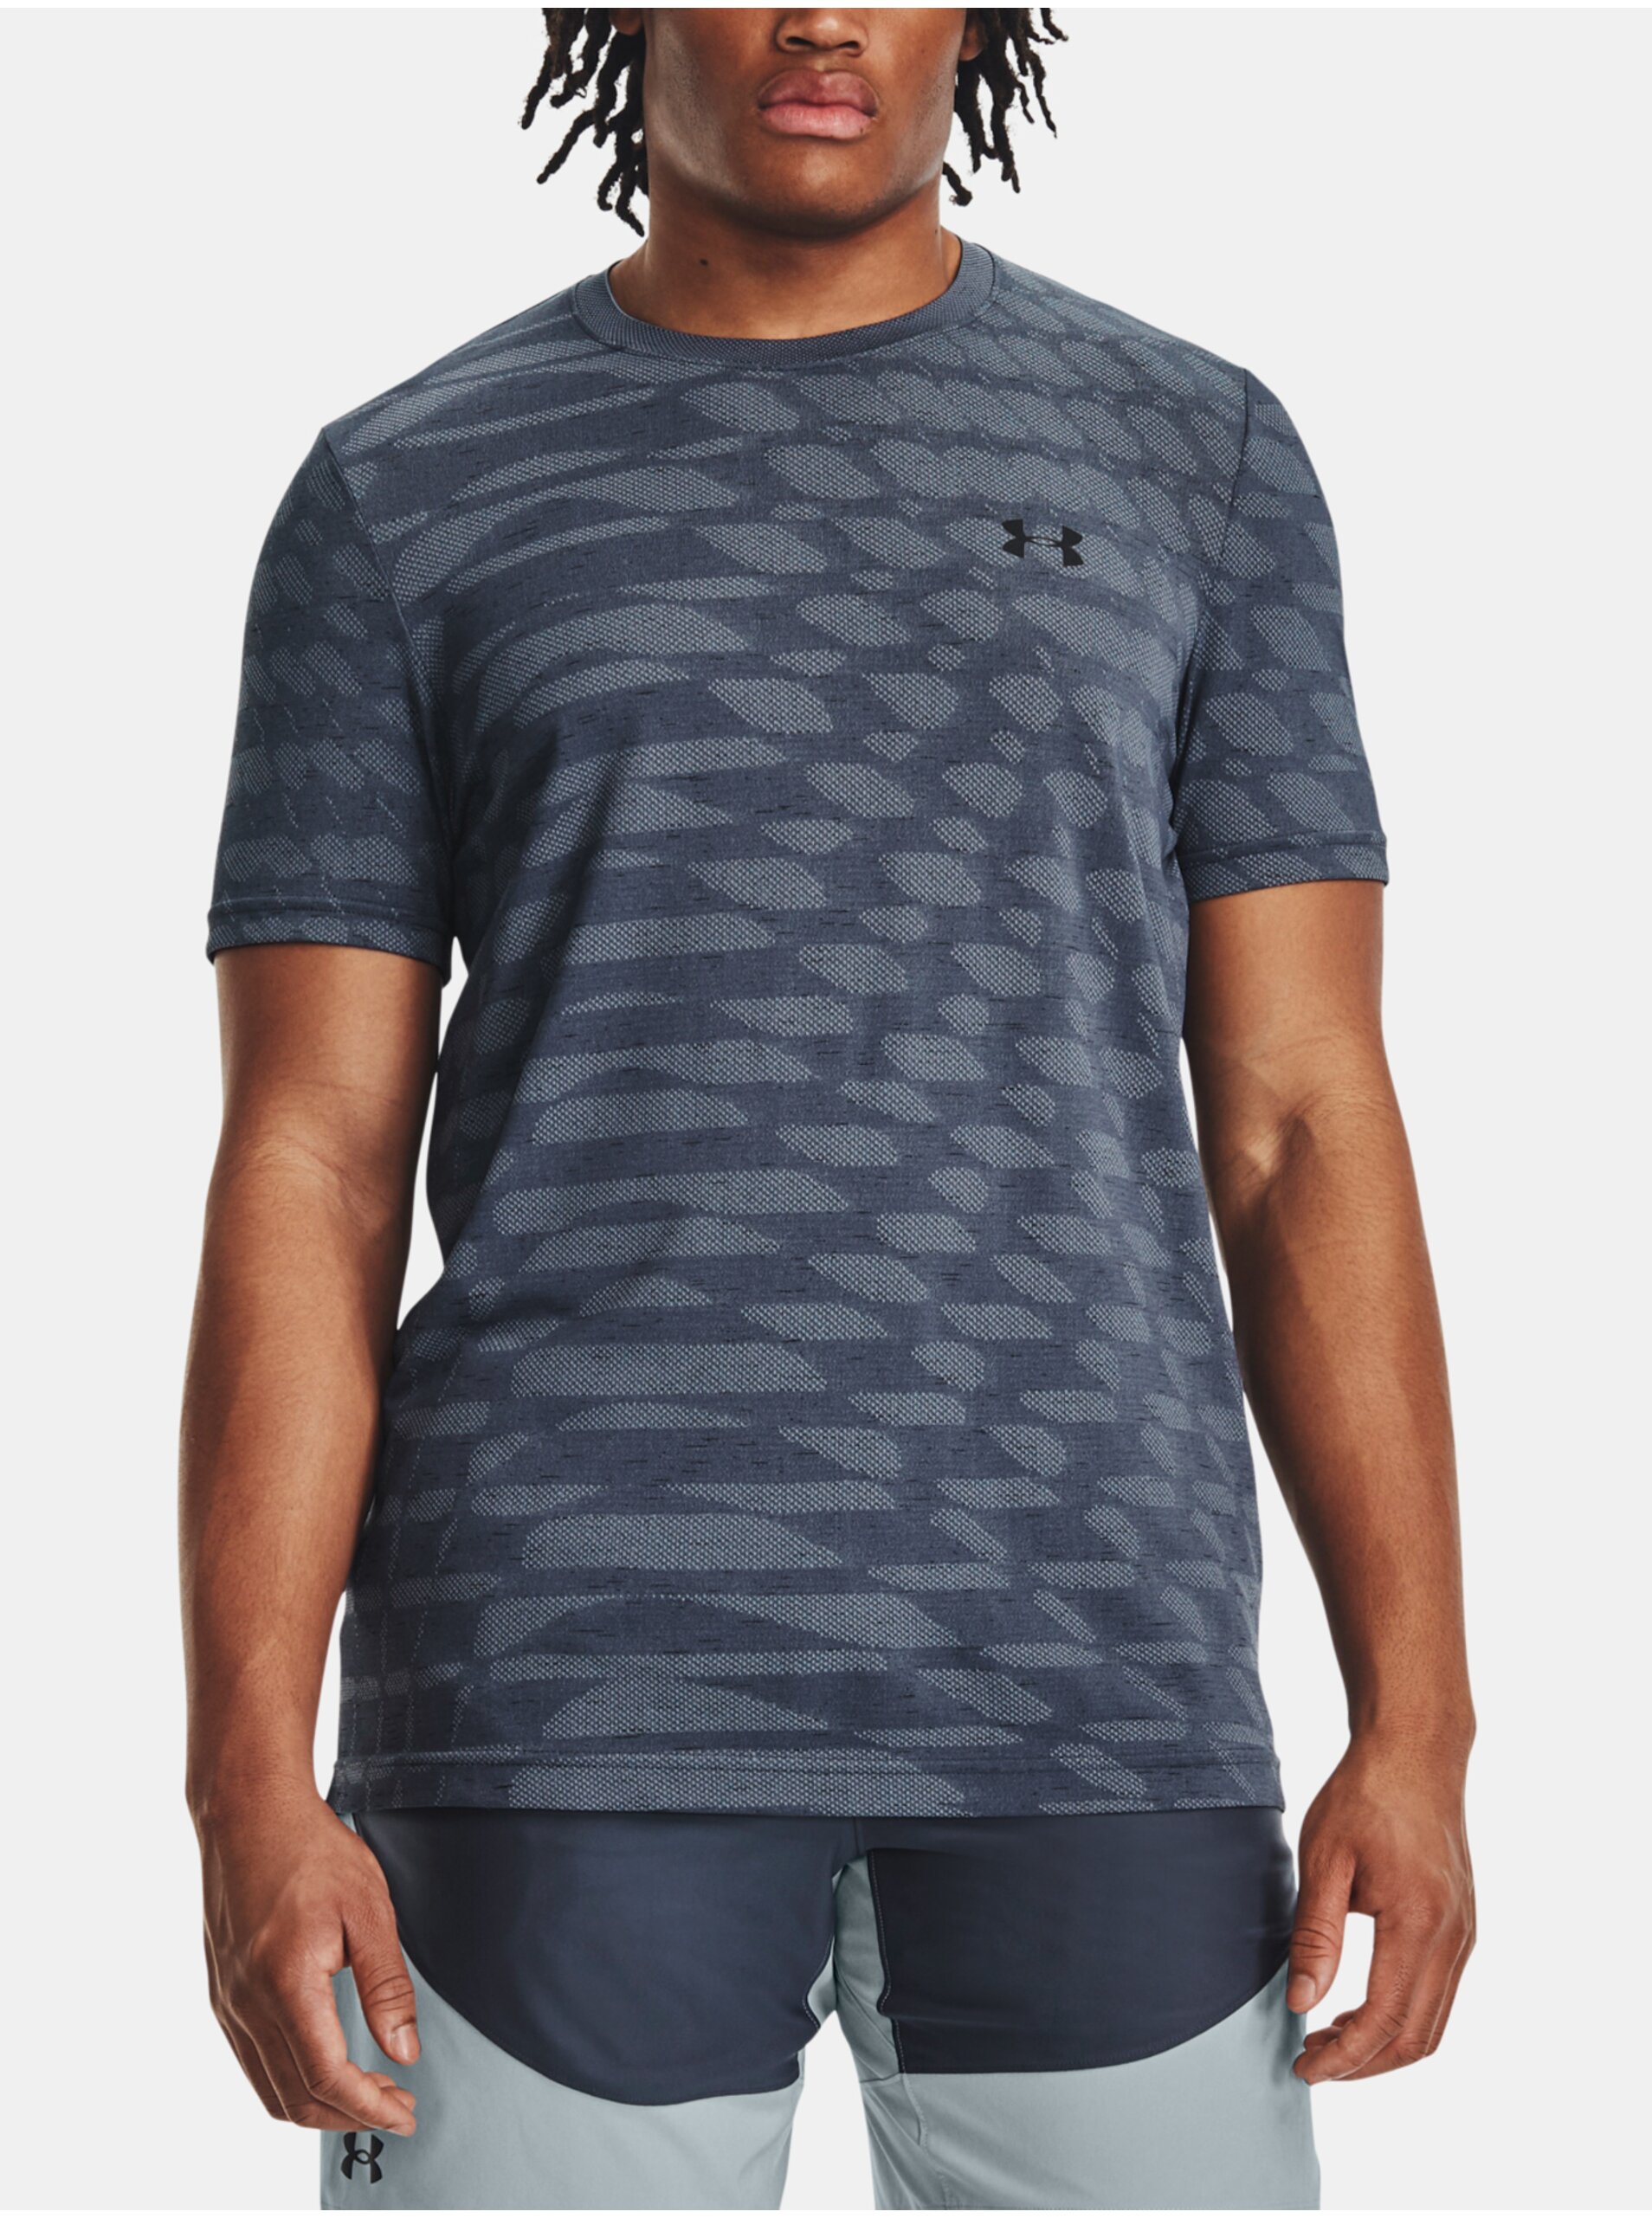 E-shop Tmavě šedé pánské vzorované sportovní tričko Under Armour Ripple